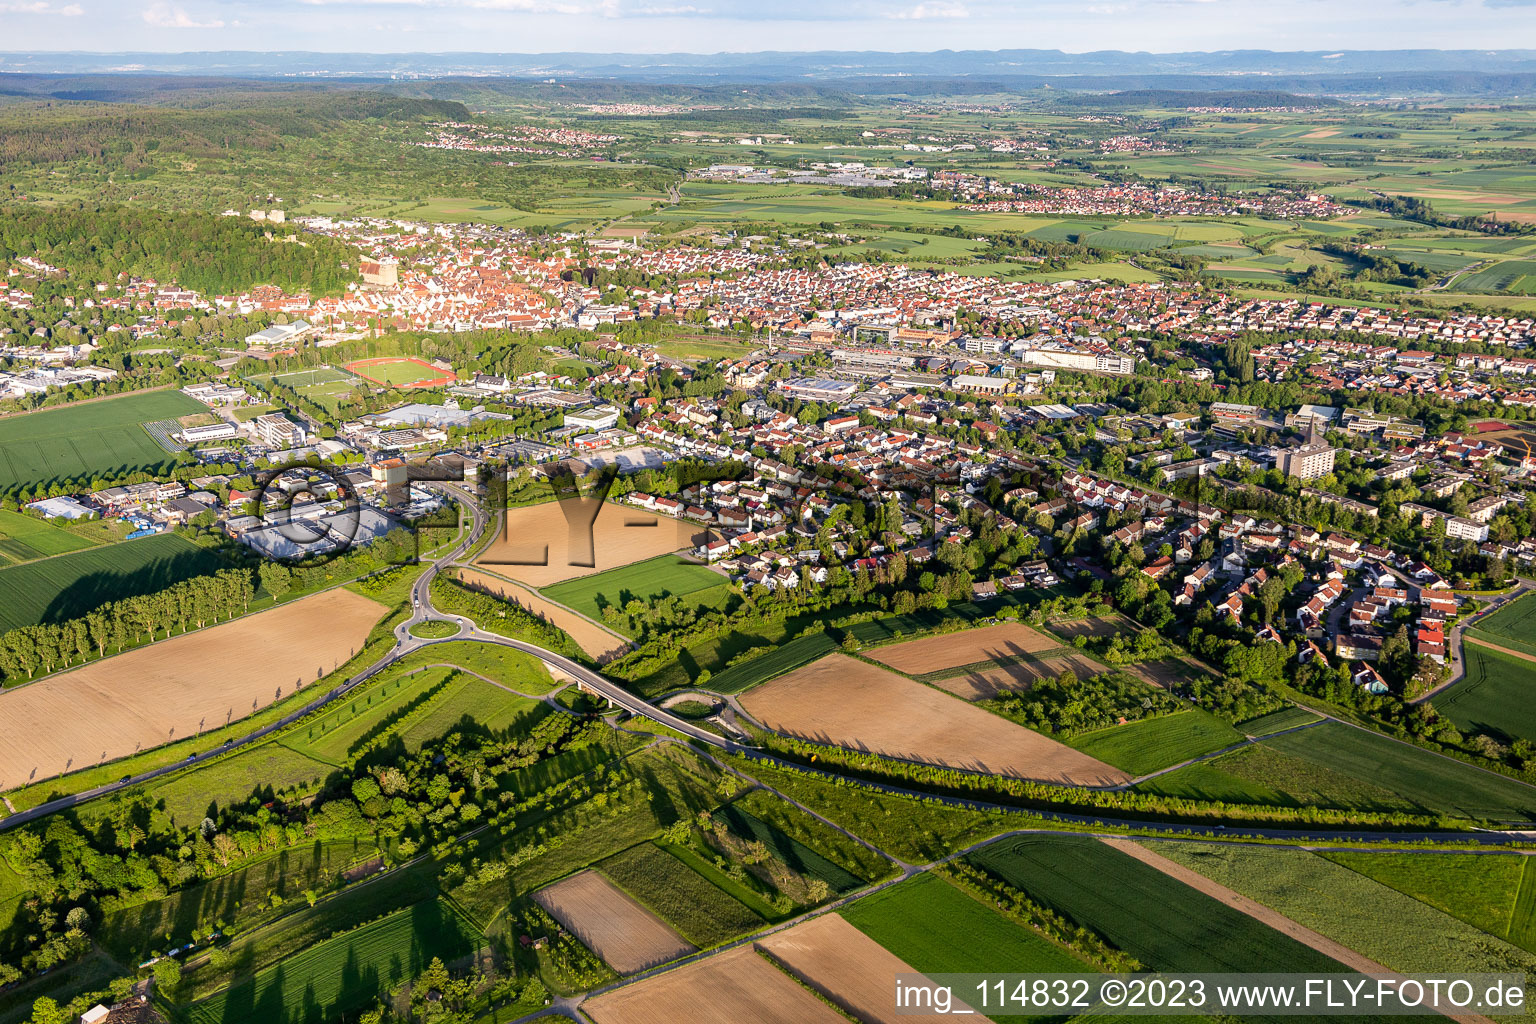 Gesamtstadtbild in Herrenberg im Bundesland Baden-Württemberg, Deutschland